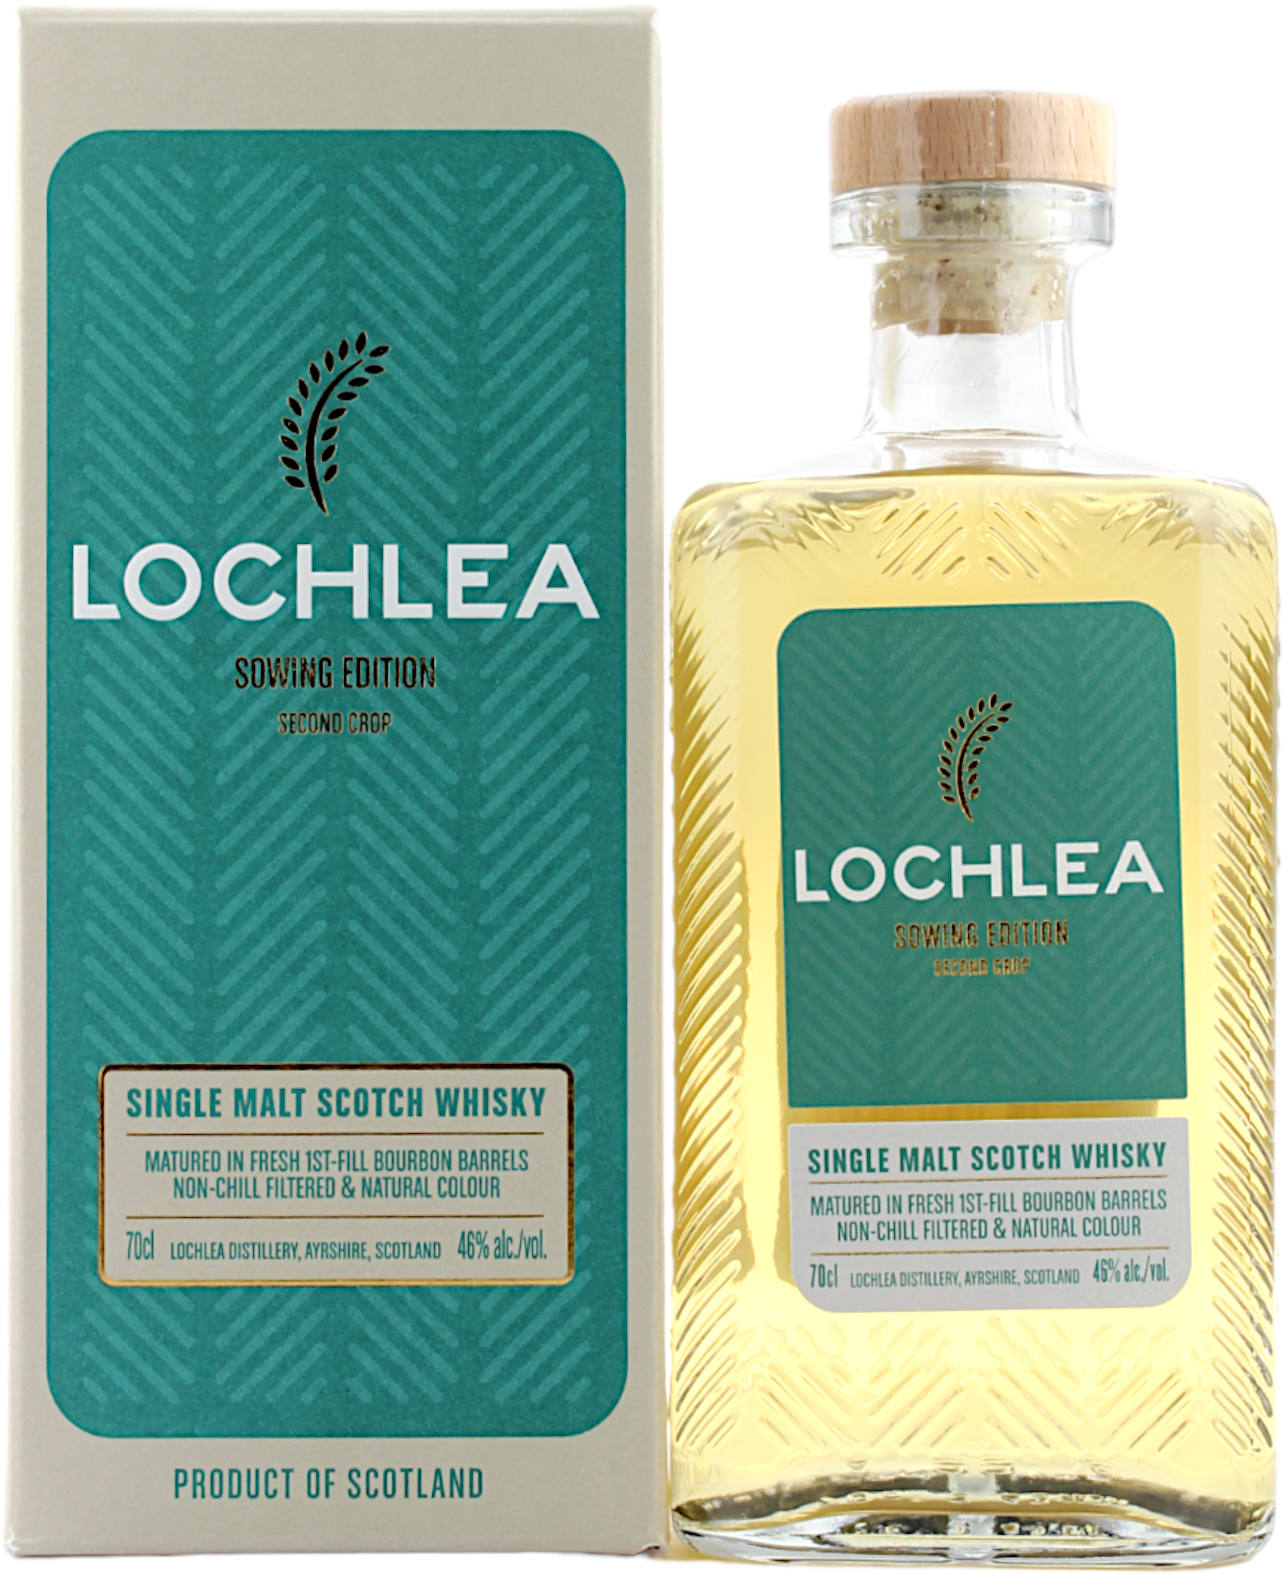 Lochlea Distillery Sowing Edition Second Crop 46.0% 0,7l